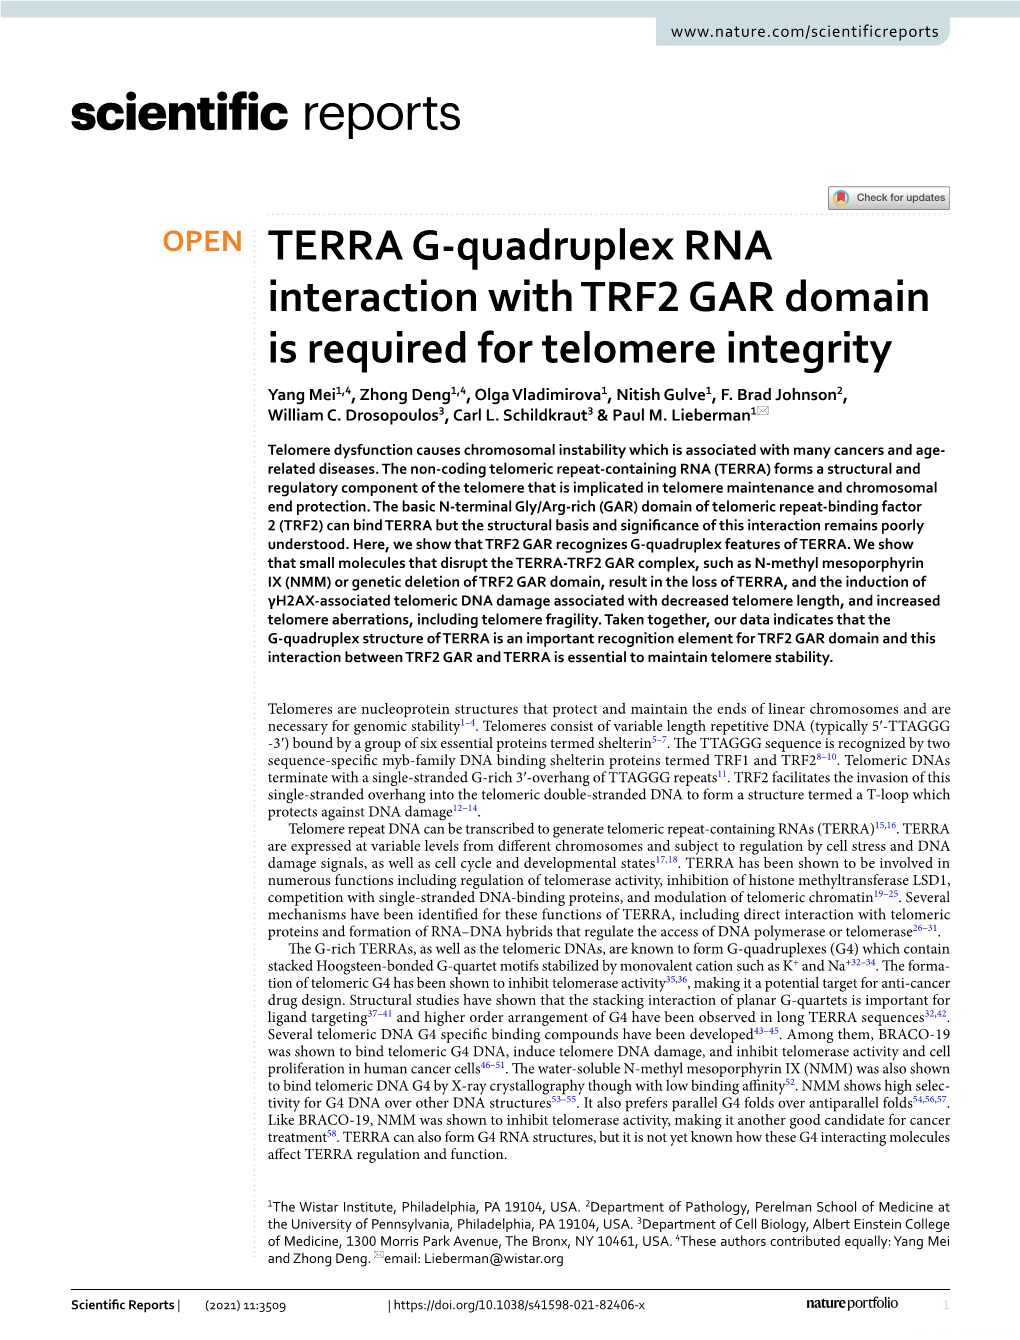 TERRA G-Quadruplex RNA Interaction with TRF2 GAR Domain Is